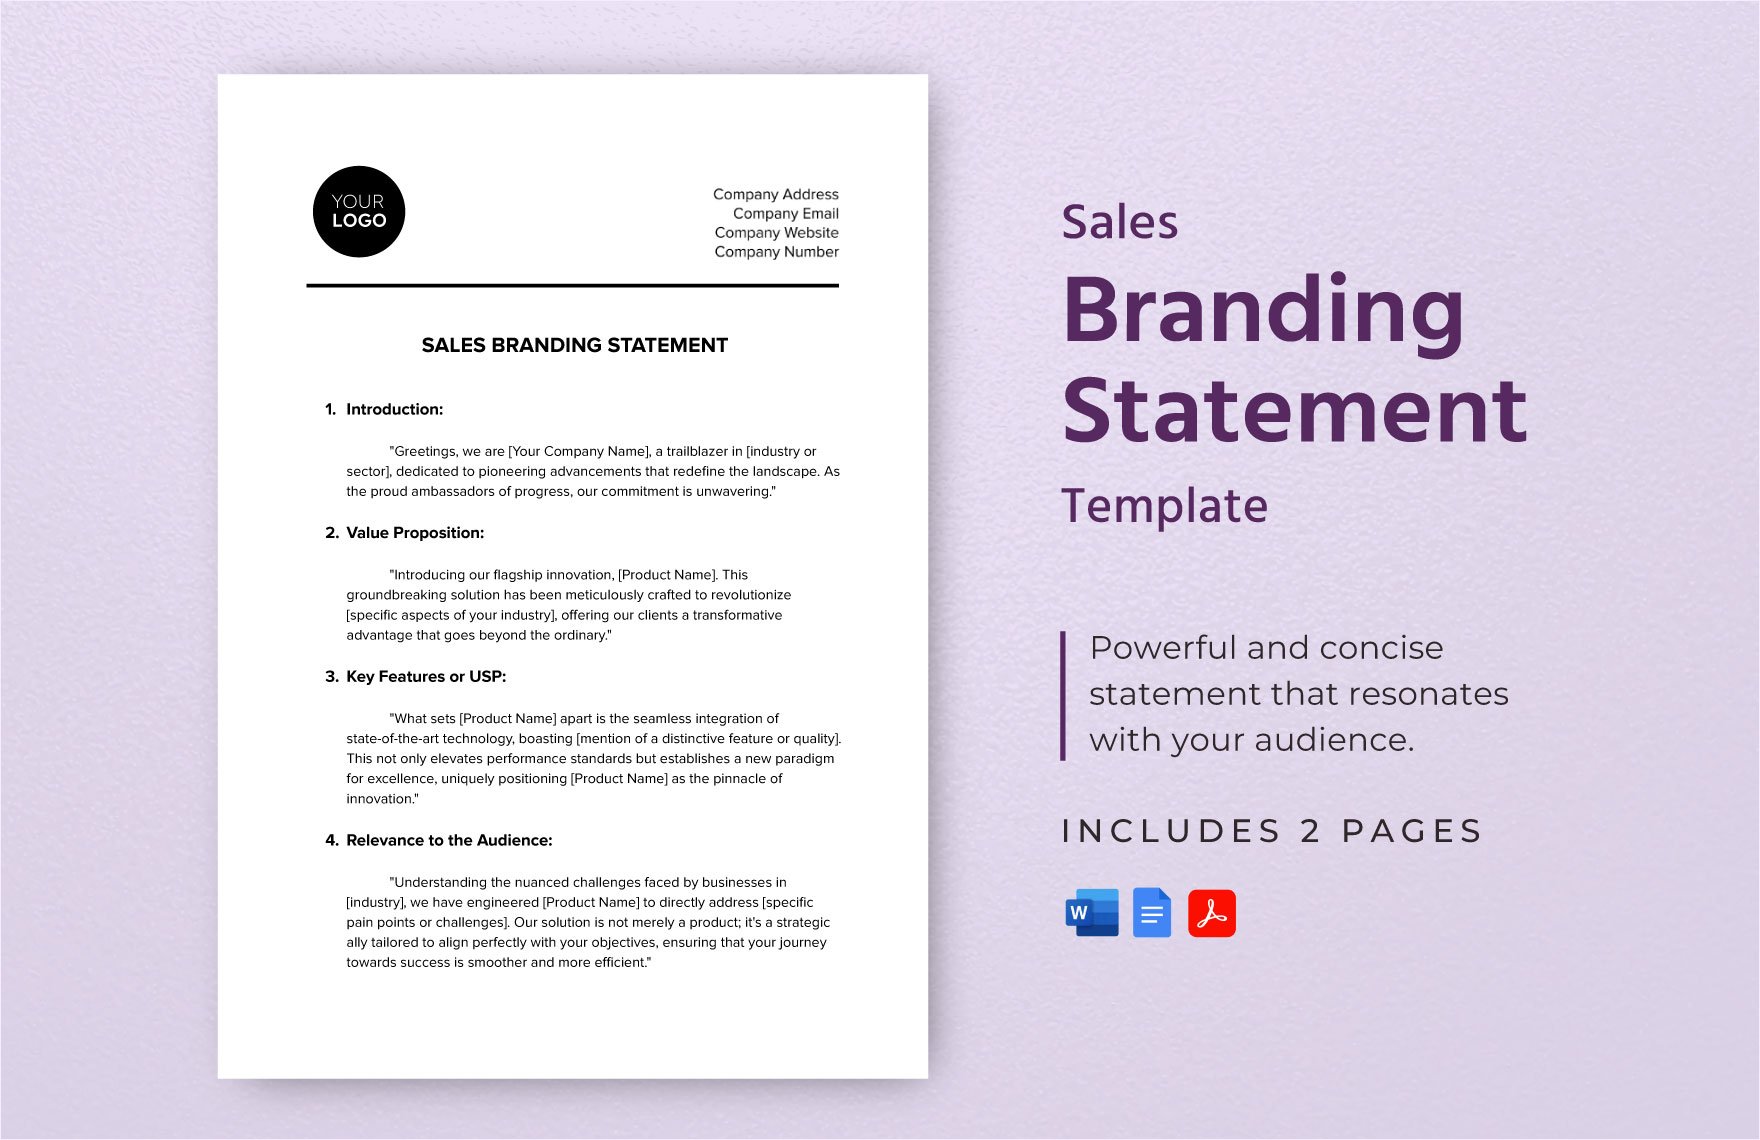 Sales Branding Statement Template in Word, Google Docs, PDF